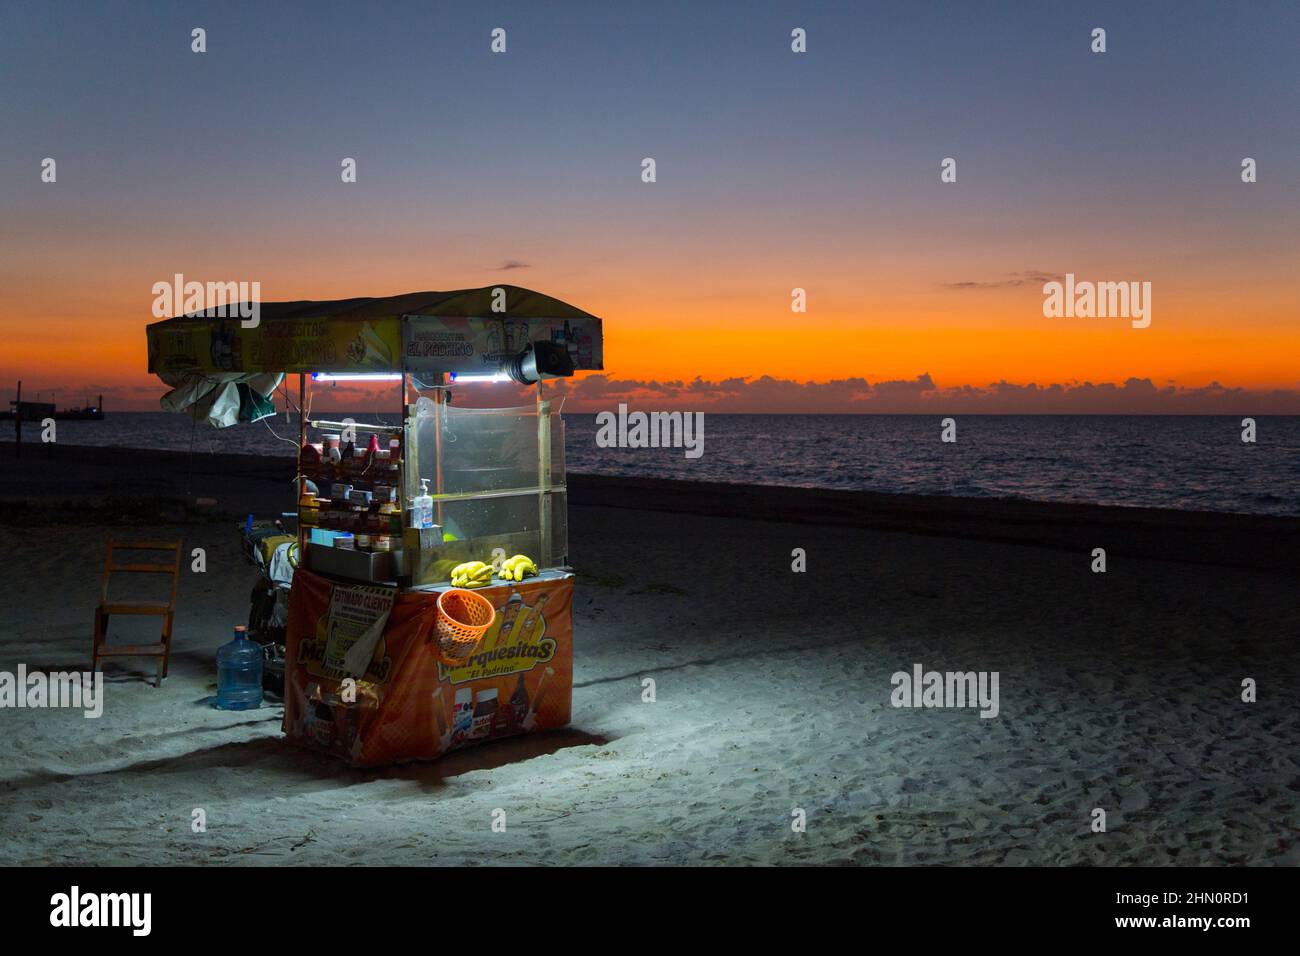 Sonnenuntergang, Imbissstand am Strand, Celestun, Bundesstaat Yucatan, Mexiko Stockfoto